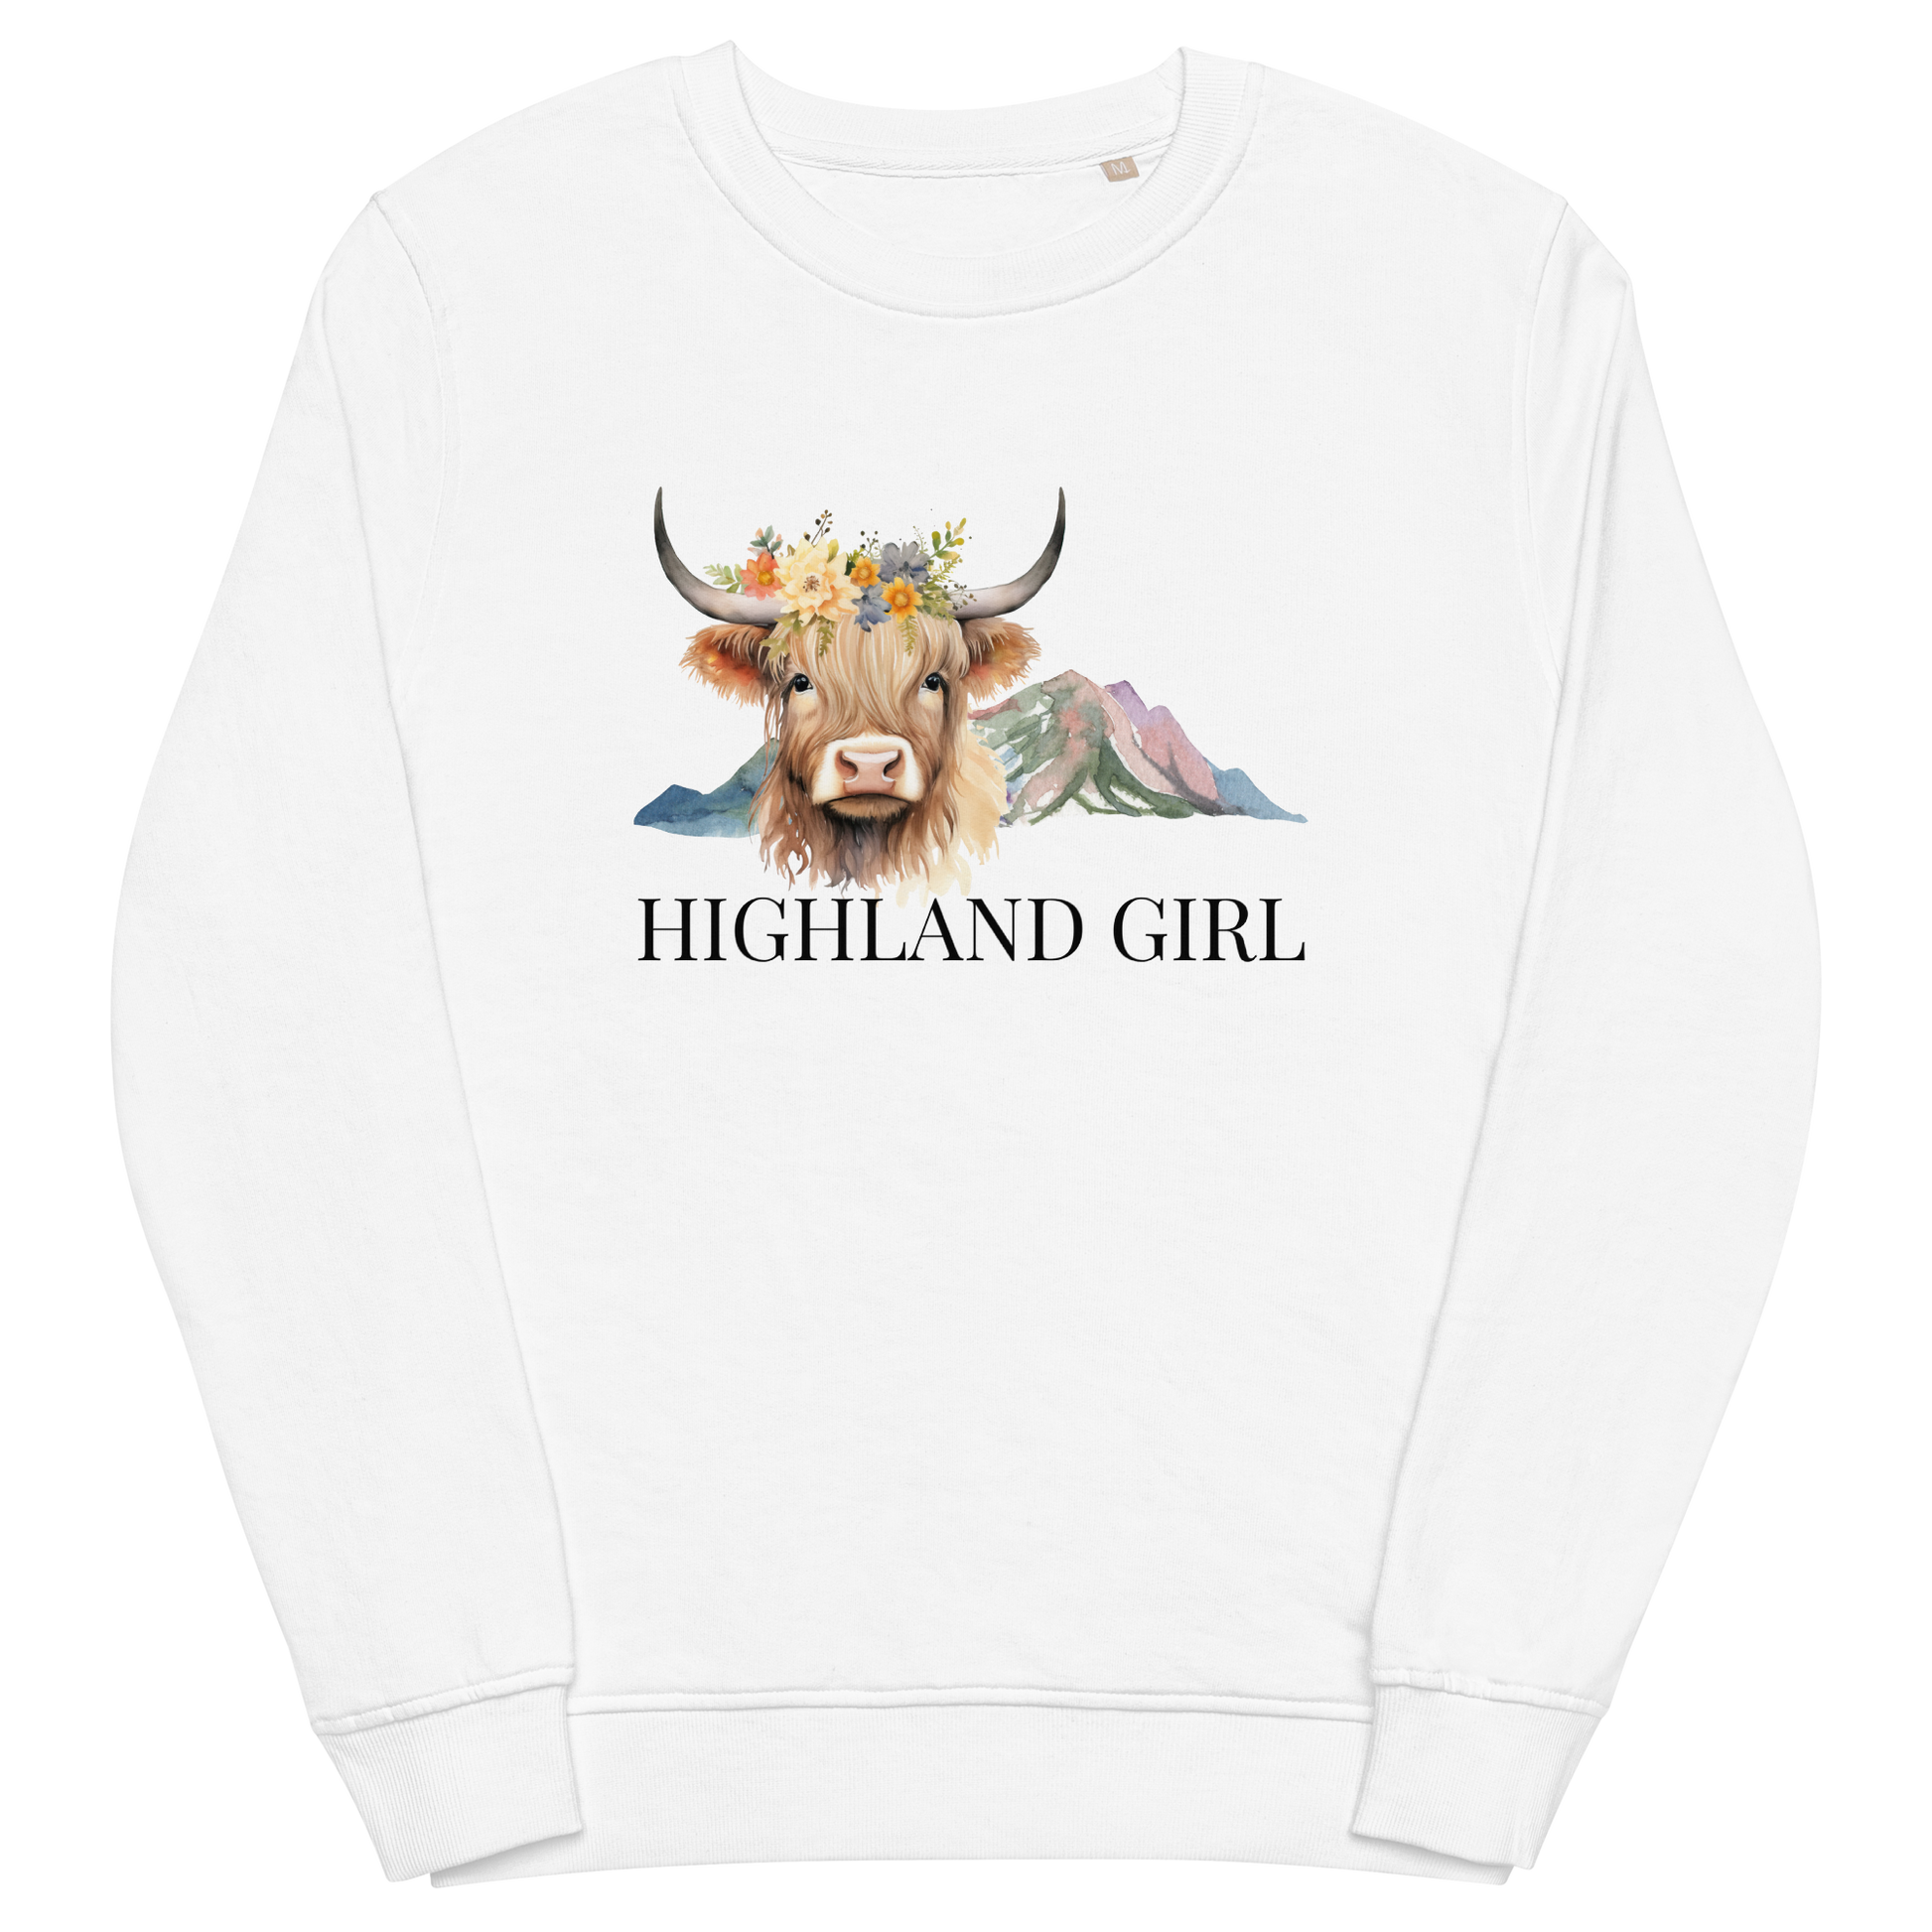 White Organic Cotton Highland Cow Sweatshirt showcasing an adorable Highland Girl graphic on the chest - Cute Graphic Highland Cow Sweatshirts - Boozy Fox